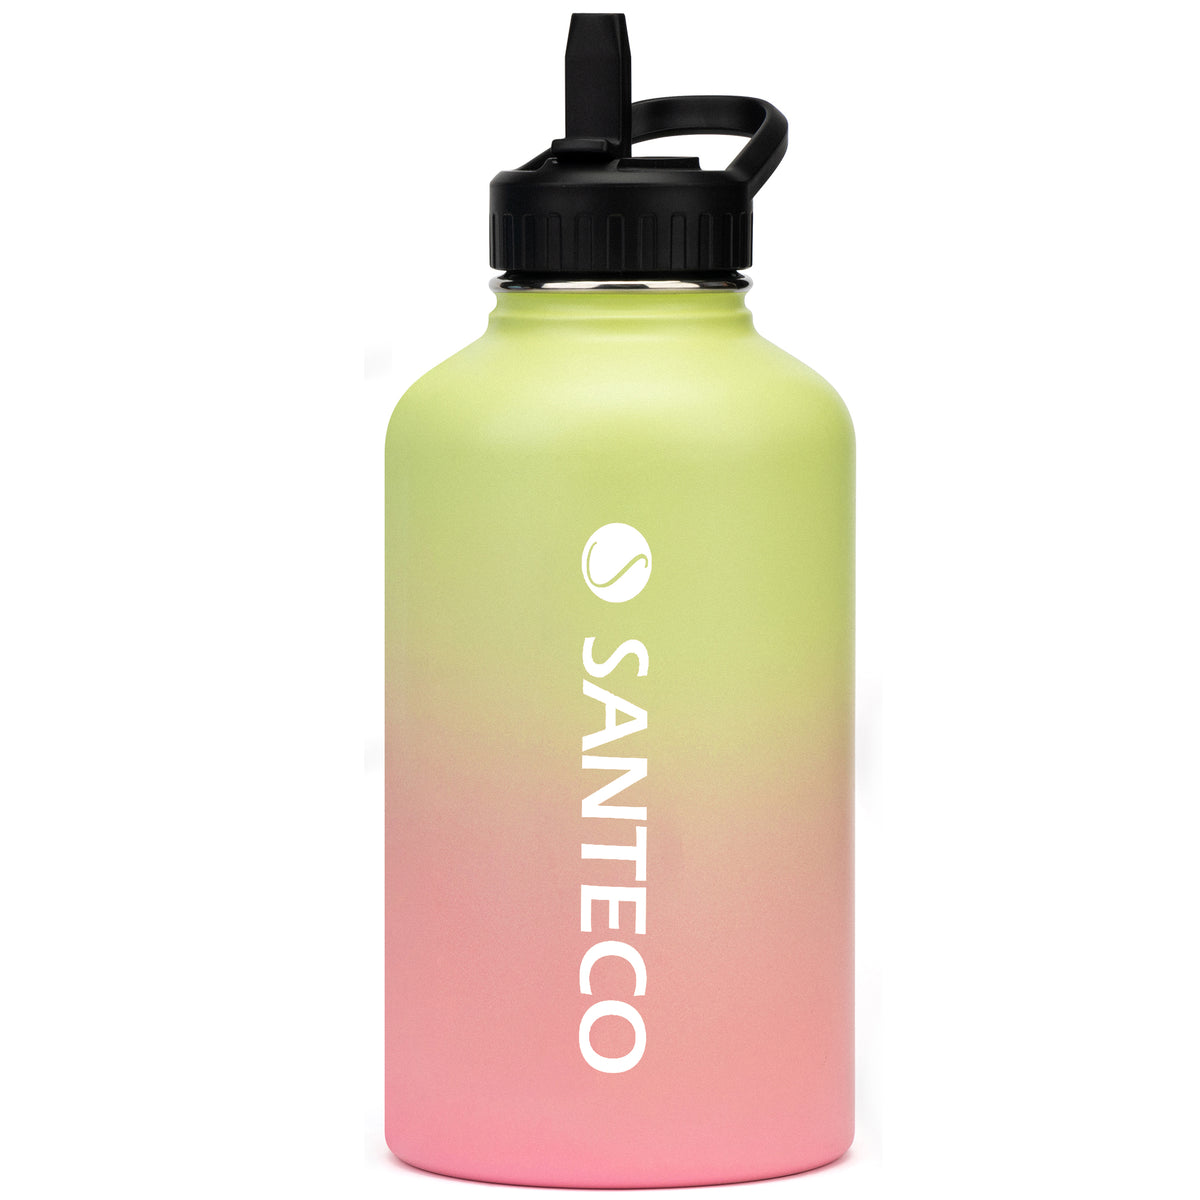 SANTECO water bottle 40 oz (about 1134.0 grams), vacuum insulation sta